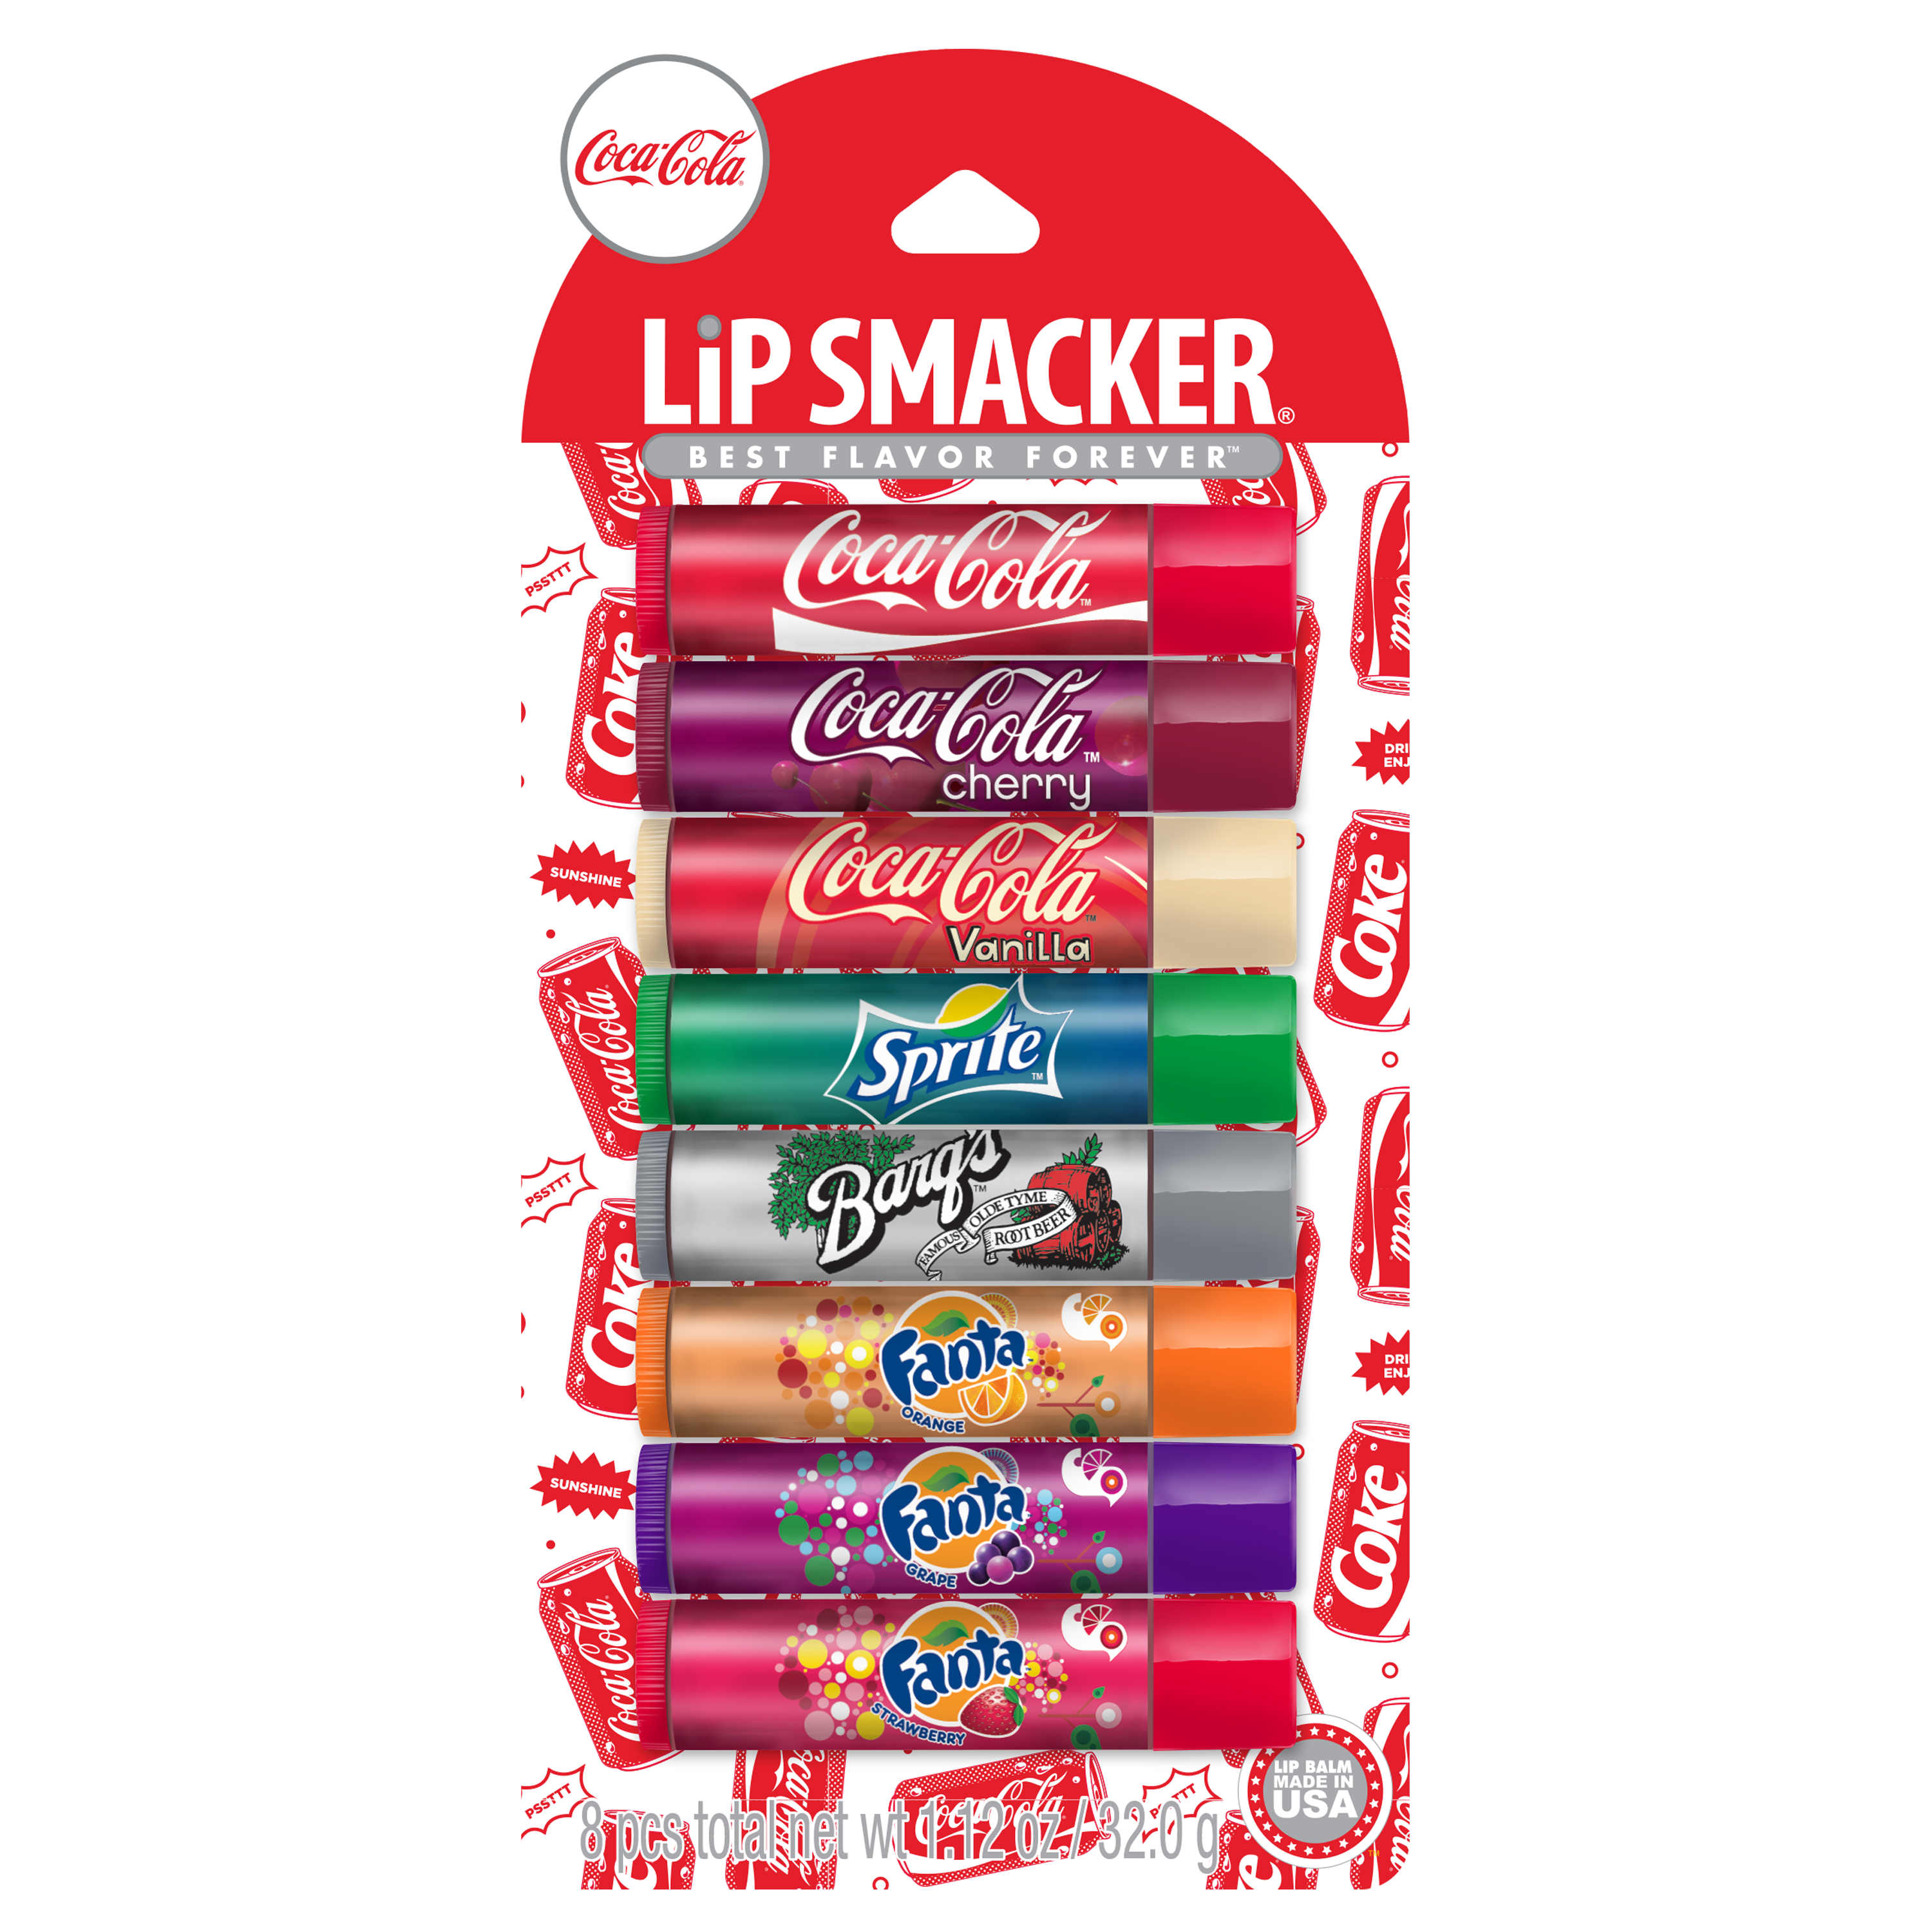 Lip Smacker Coca Cola Lip Balm Party Pack - image 1 of 8